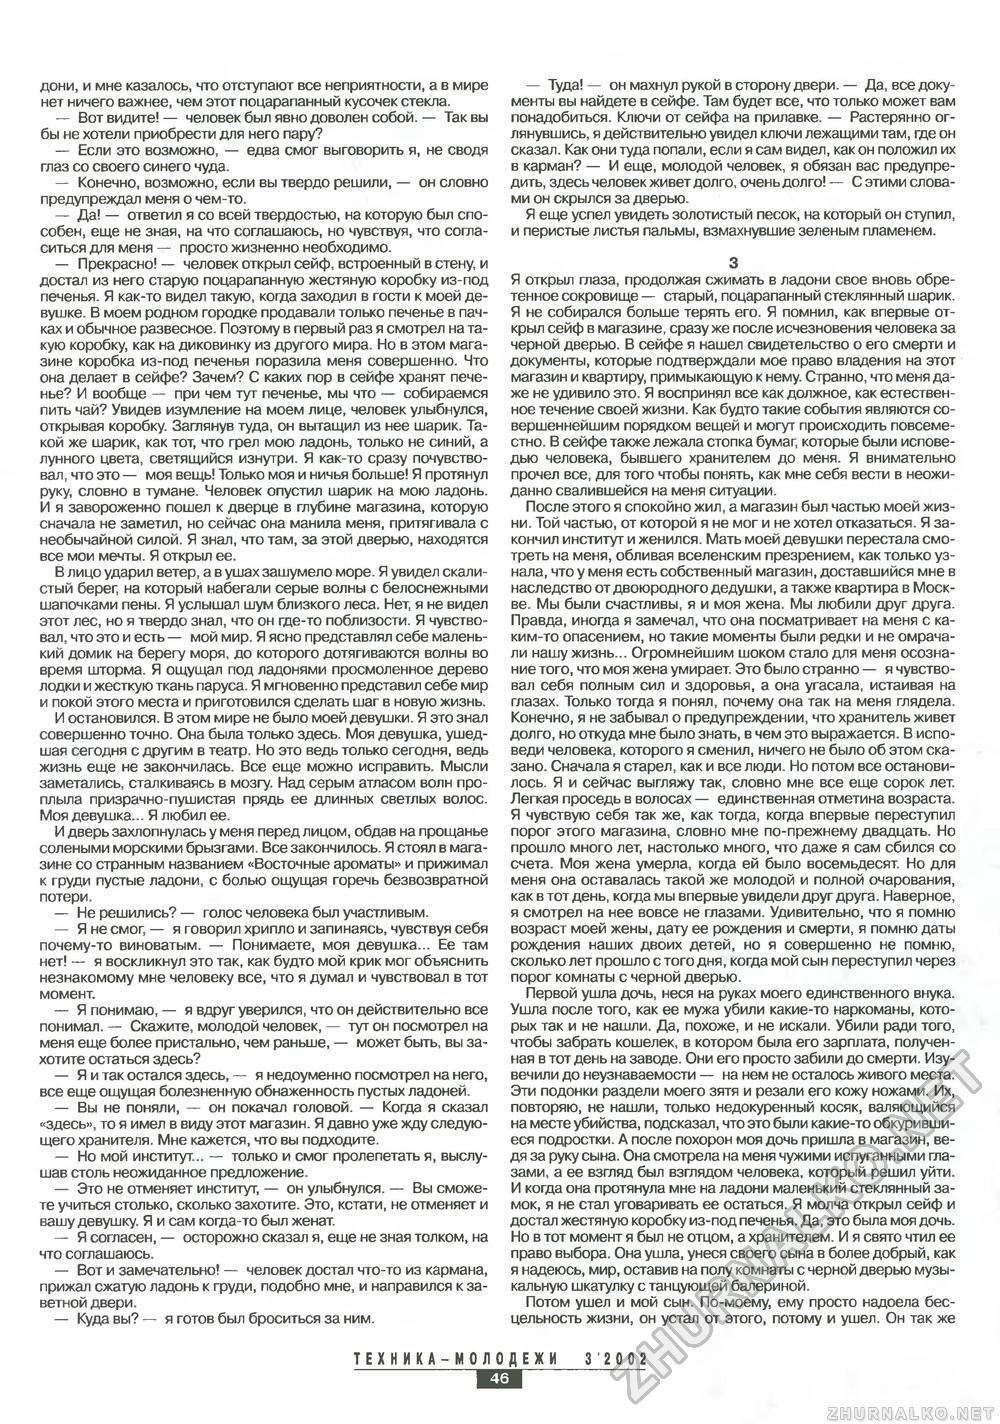 Техника - молодёжи 2002-03, страница 48